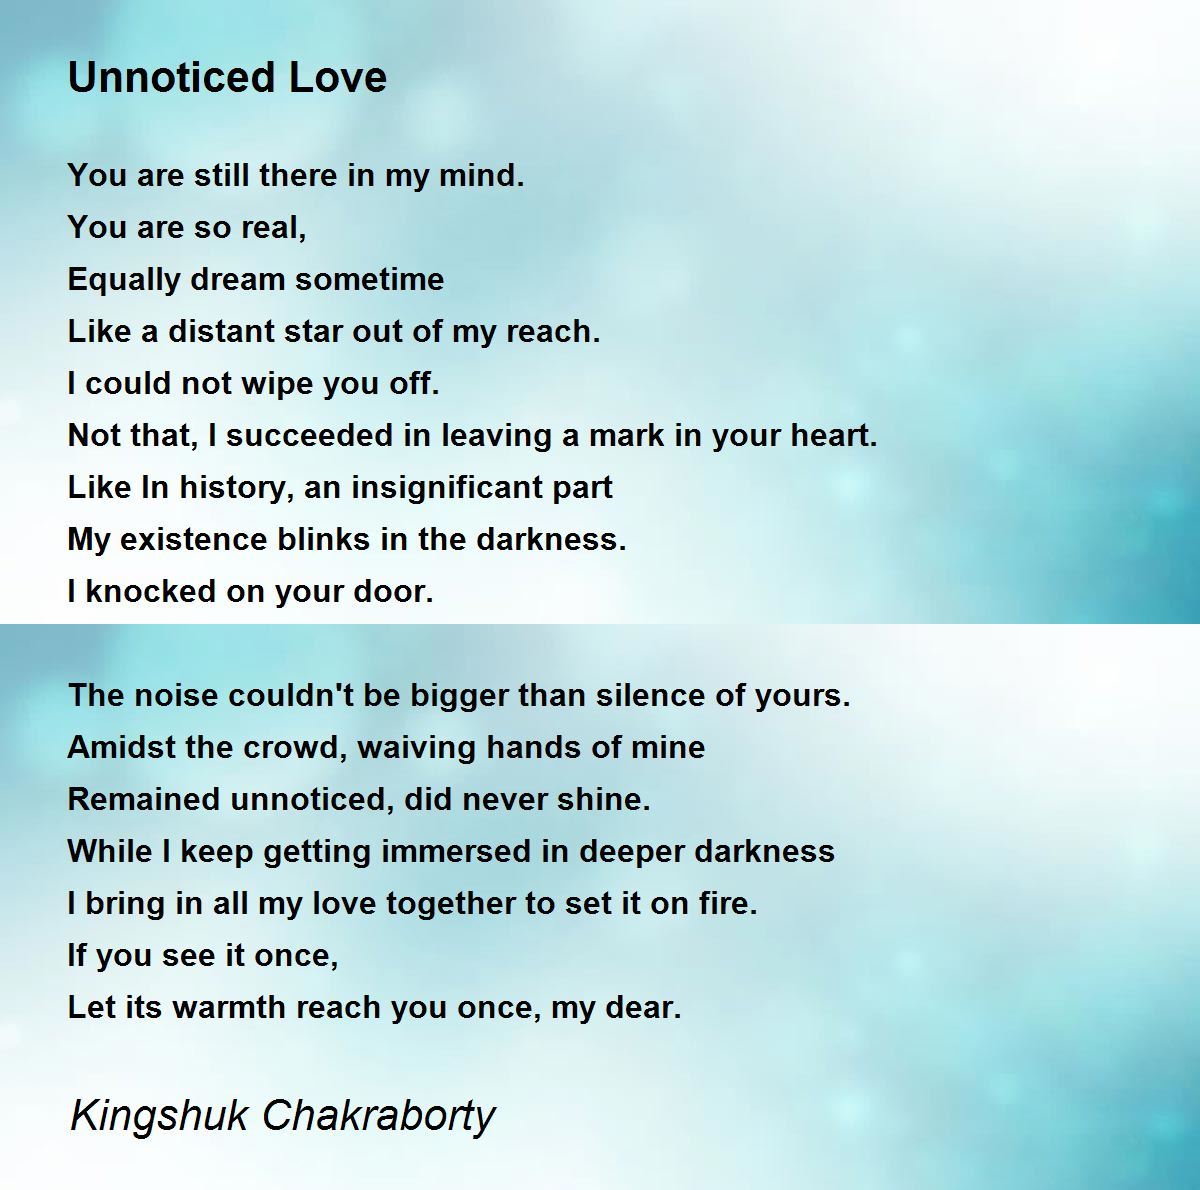 https://img.poemhunter.com/i/poem_images/846/unnoticed-love.jpg